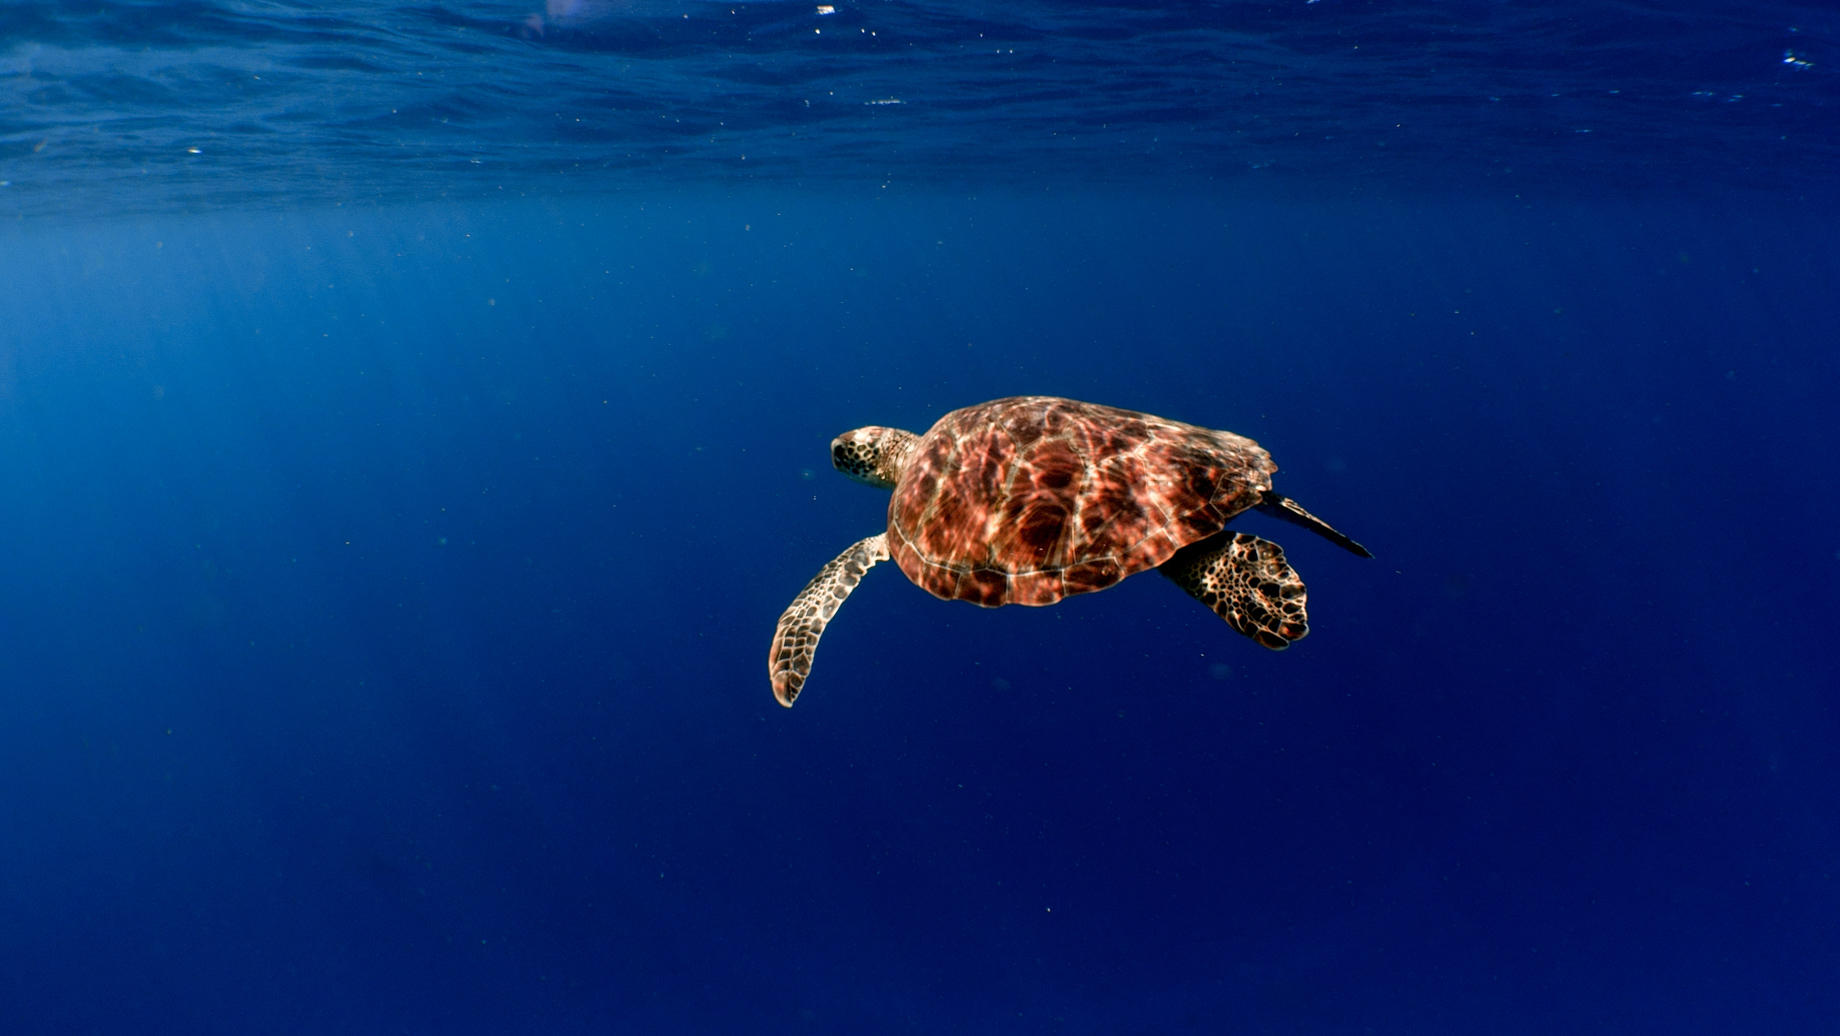 Amilla Fushi Resort and Residences - Baa Atoll, Maldives - Underwater Sea Turtle